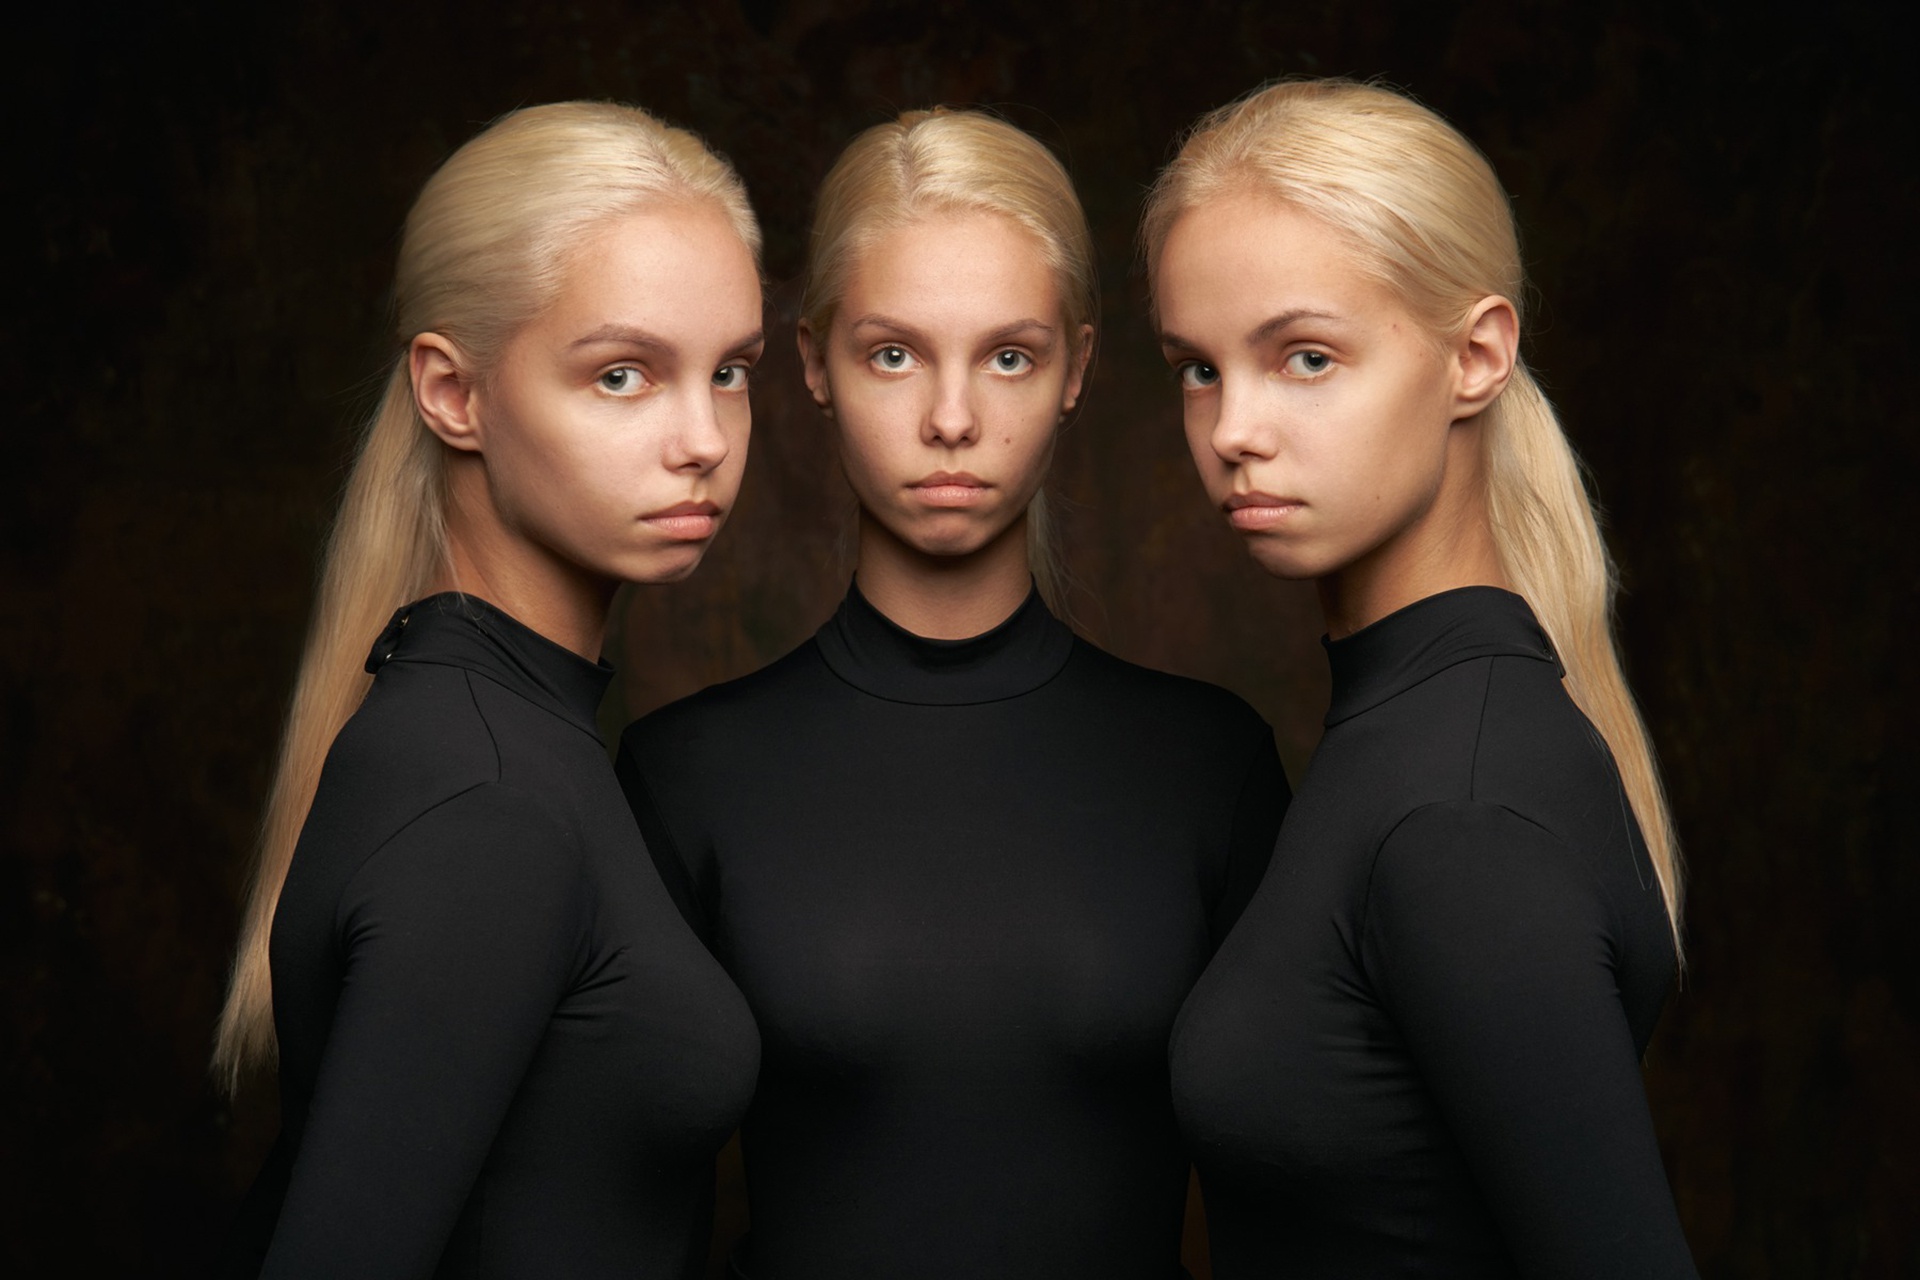 People 1920x1280 triplets blonde women portrait model group of women sisters frontal view simple background